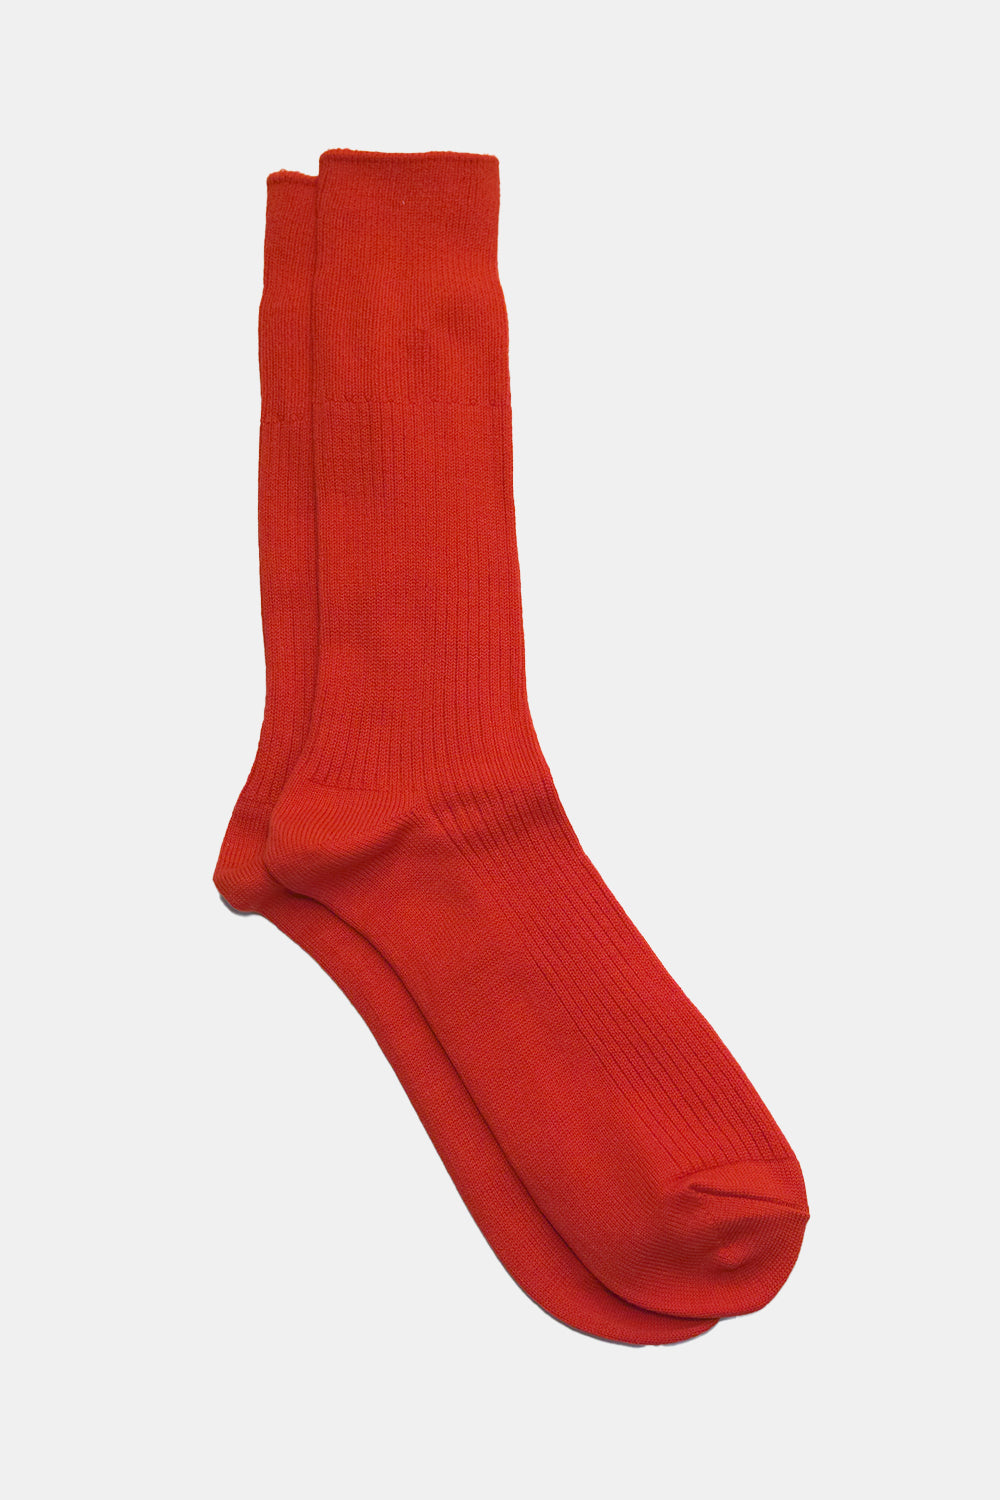 Anonymous Ism Brilliant Crew Socks (Red)